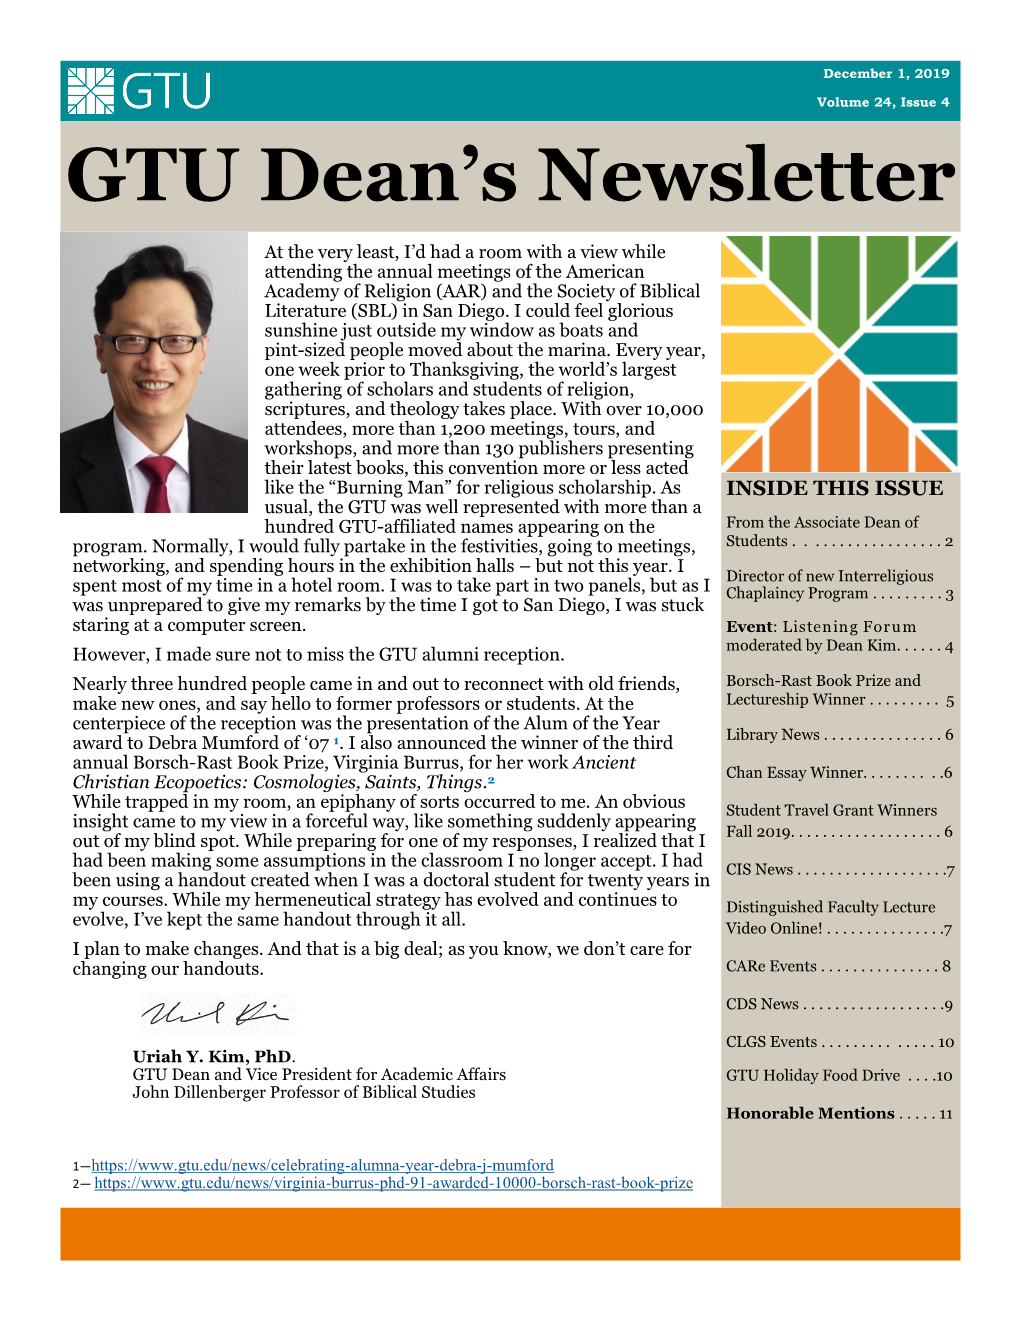 GTU Dean's Newsletter